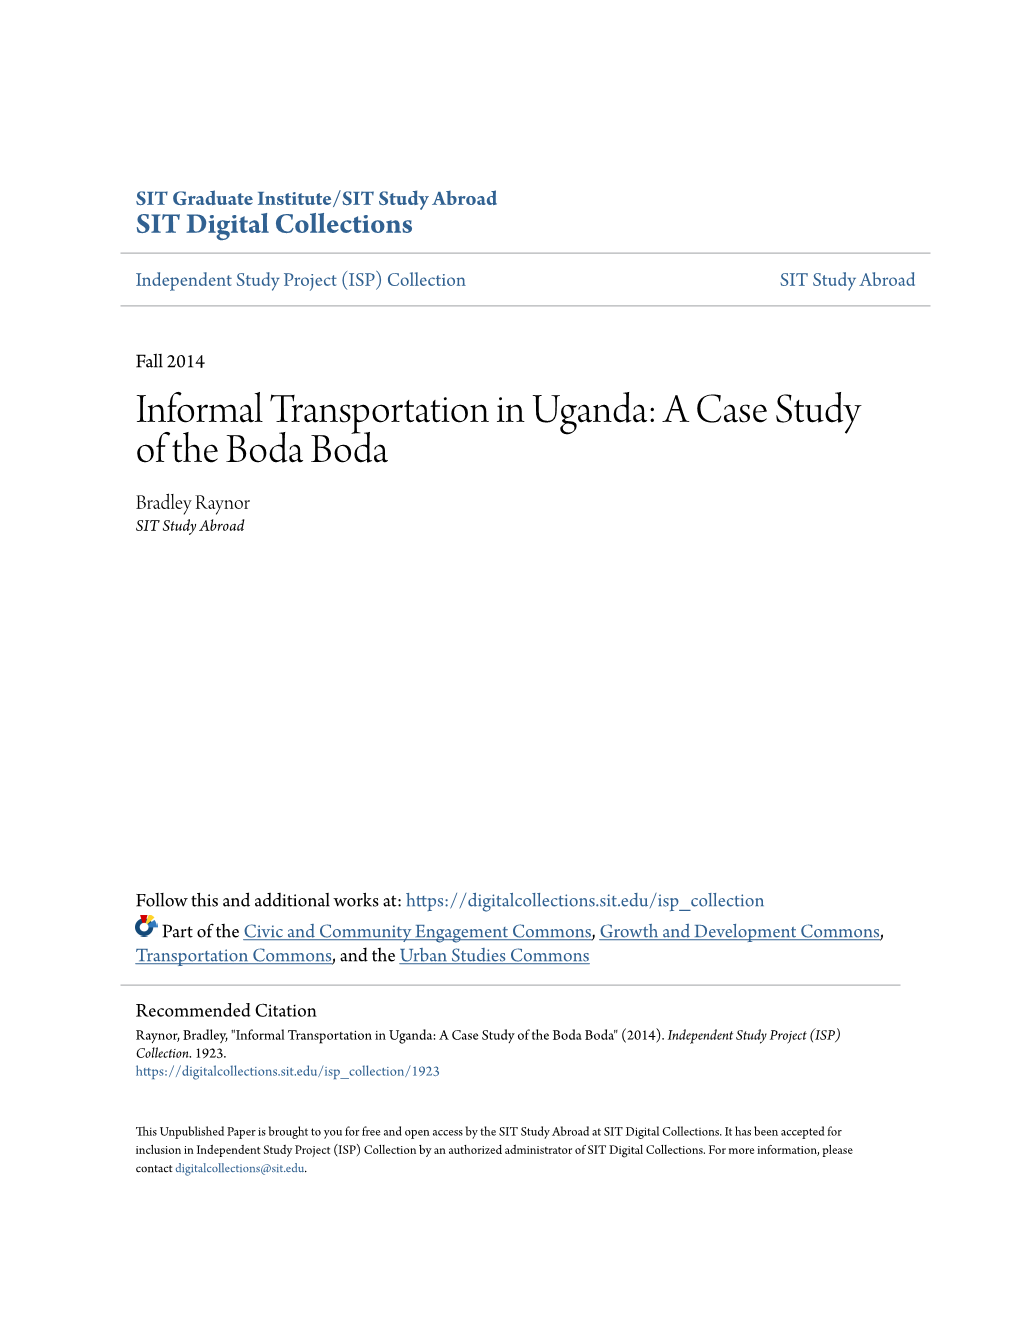 Informal Transportation in Uganda: a Case Study of the Boda Boda Bradley Raynor SIT Study Abroad